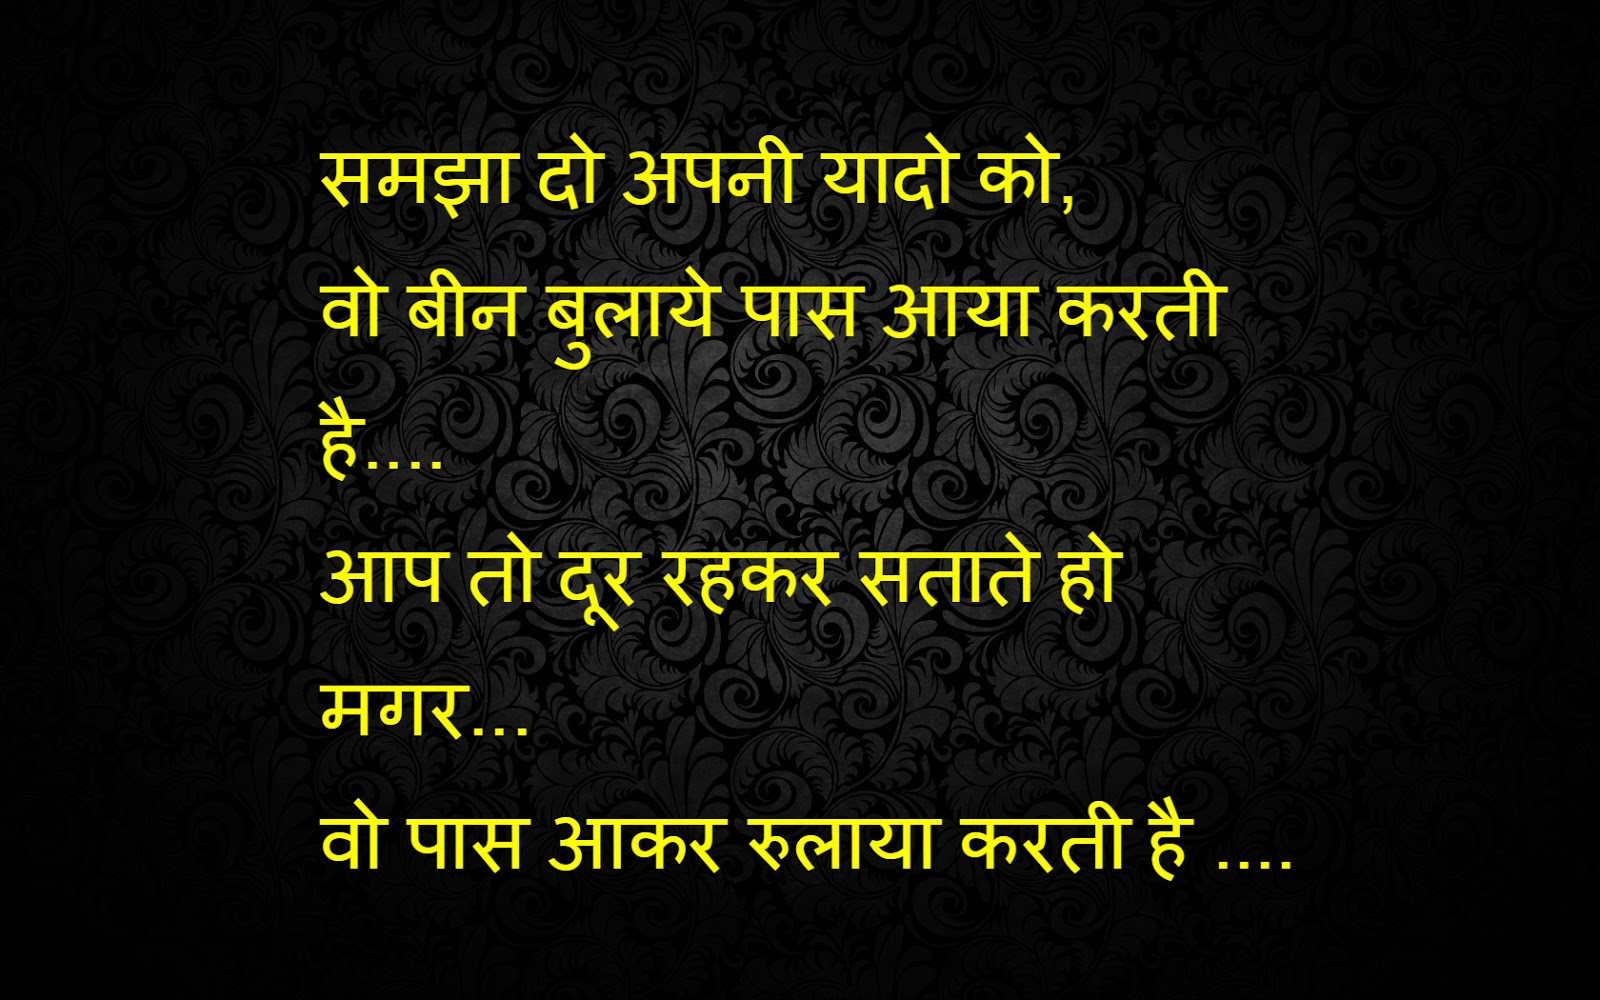 Best Romantic Shayari collection in Hindi 2016 love shayari in hindi for husband daily update hindi shayari images Very Heart Touching Love Quotes Msg